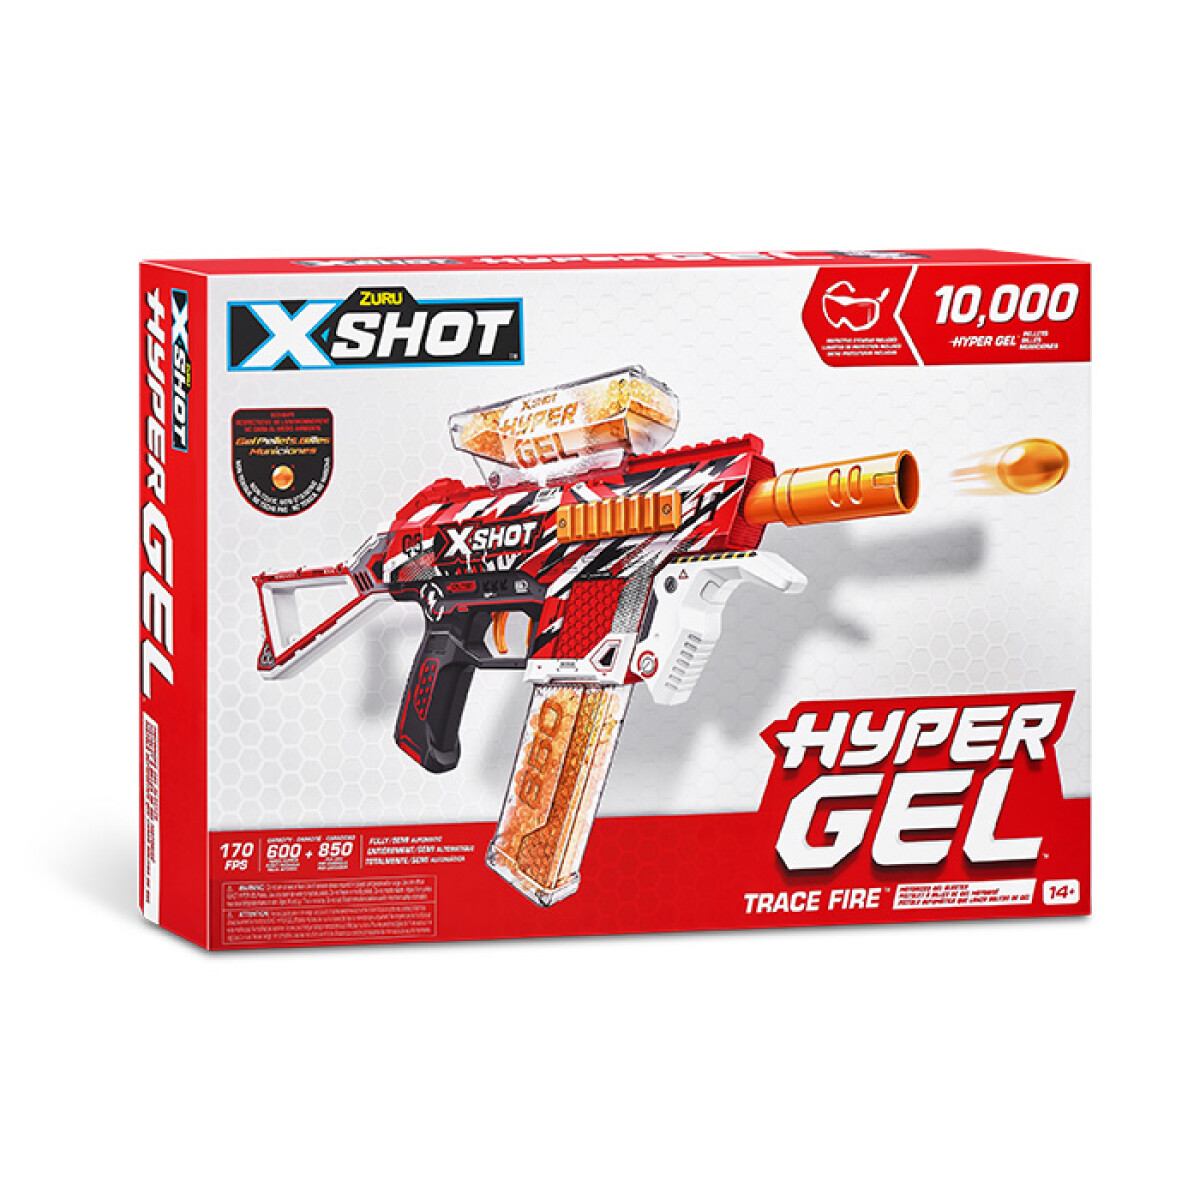 Pistola X-shot Hyper Gel Clutch 5000 Pellet - 001 